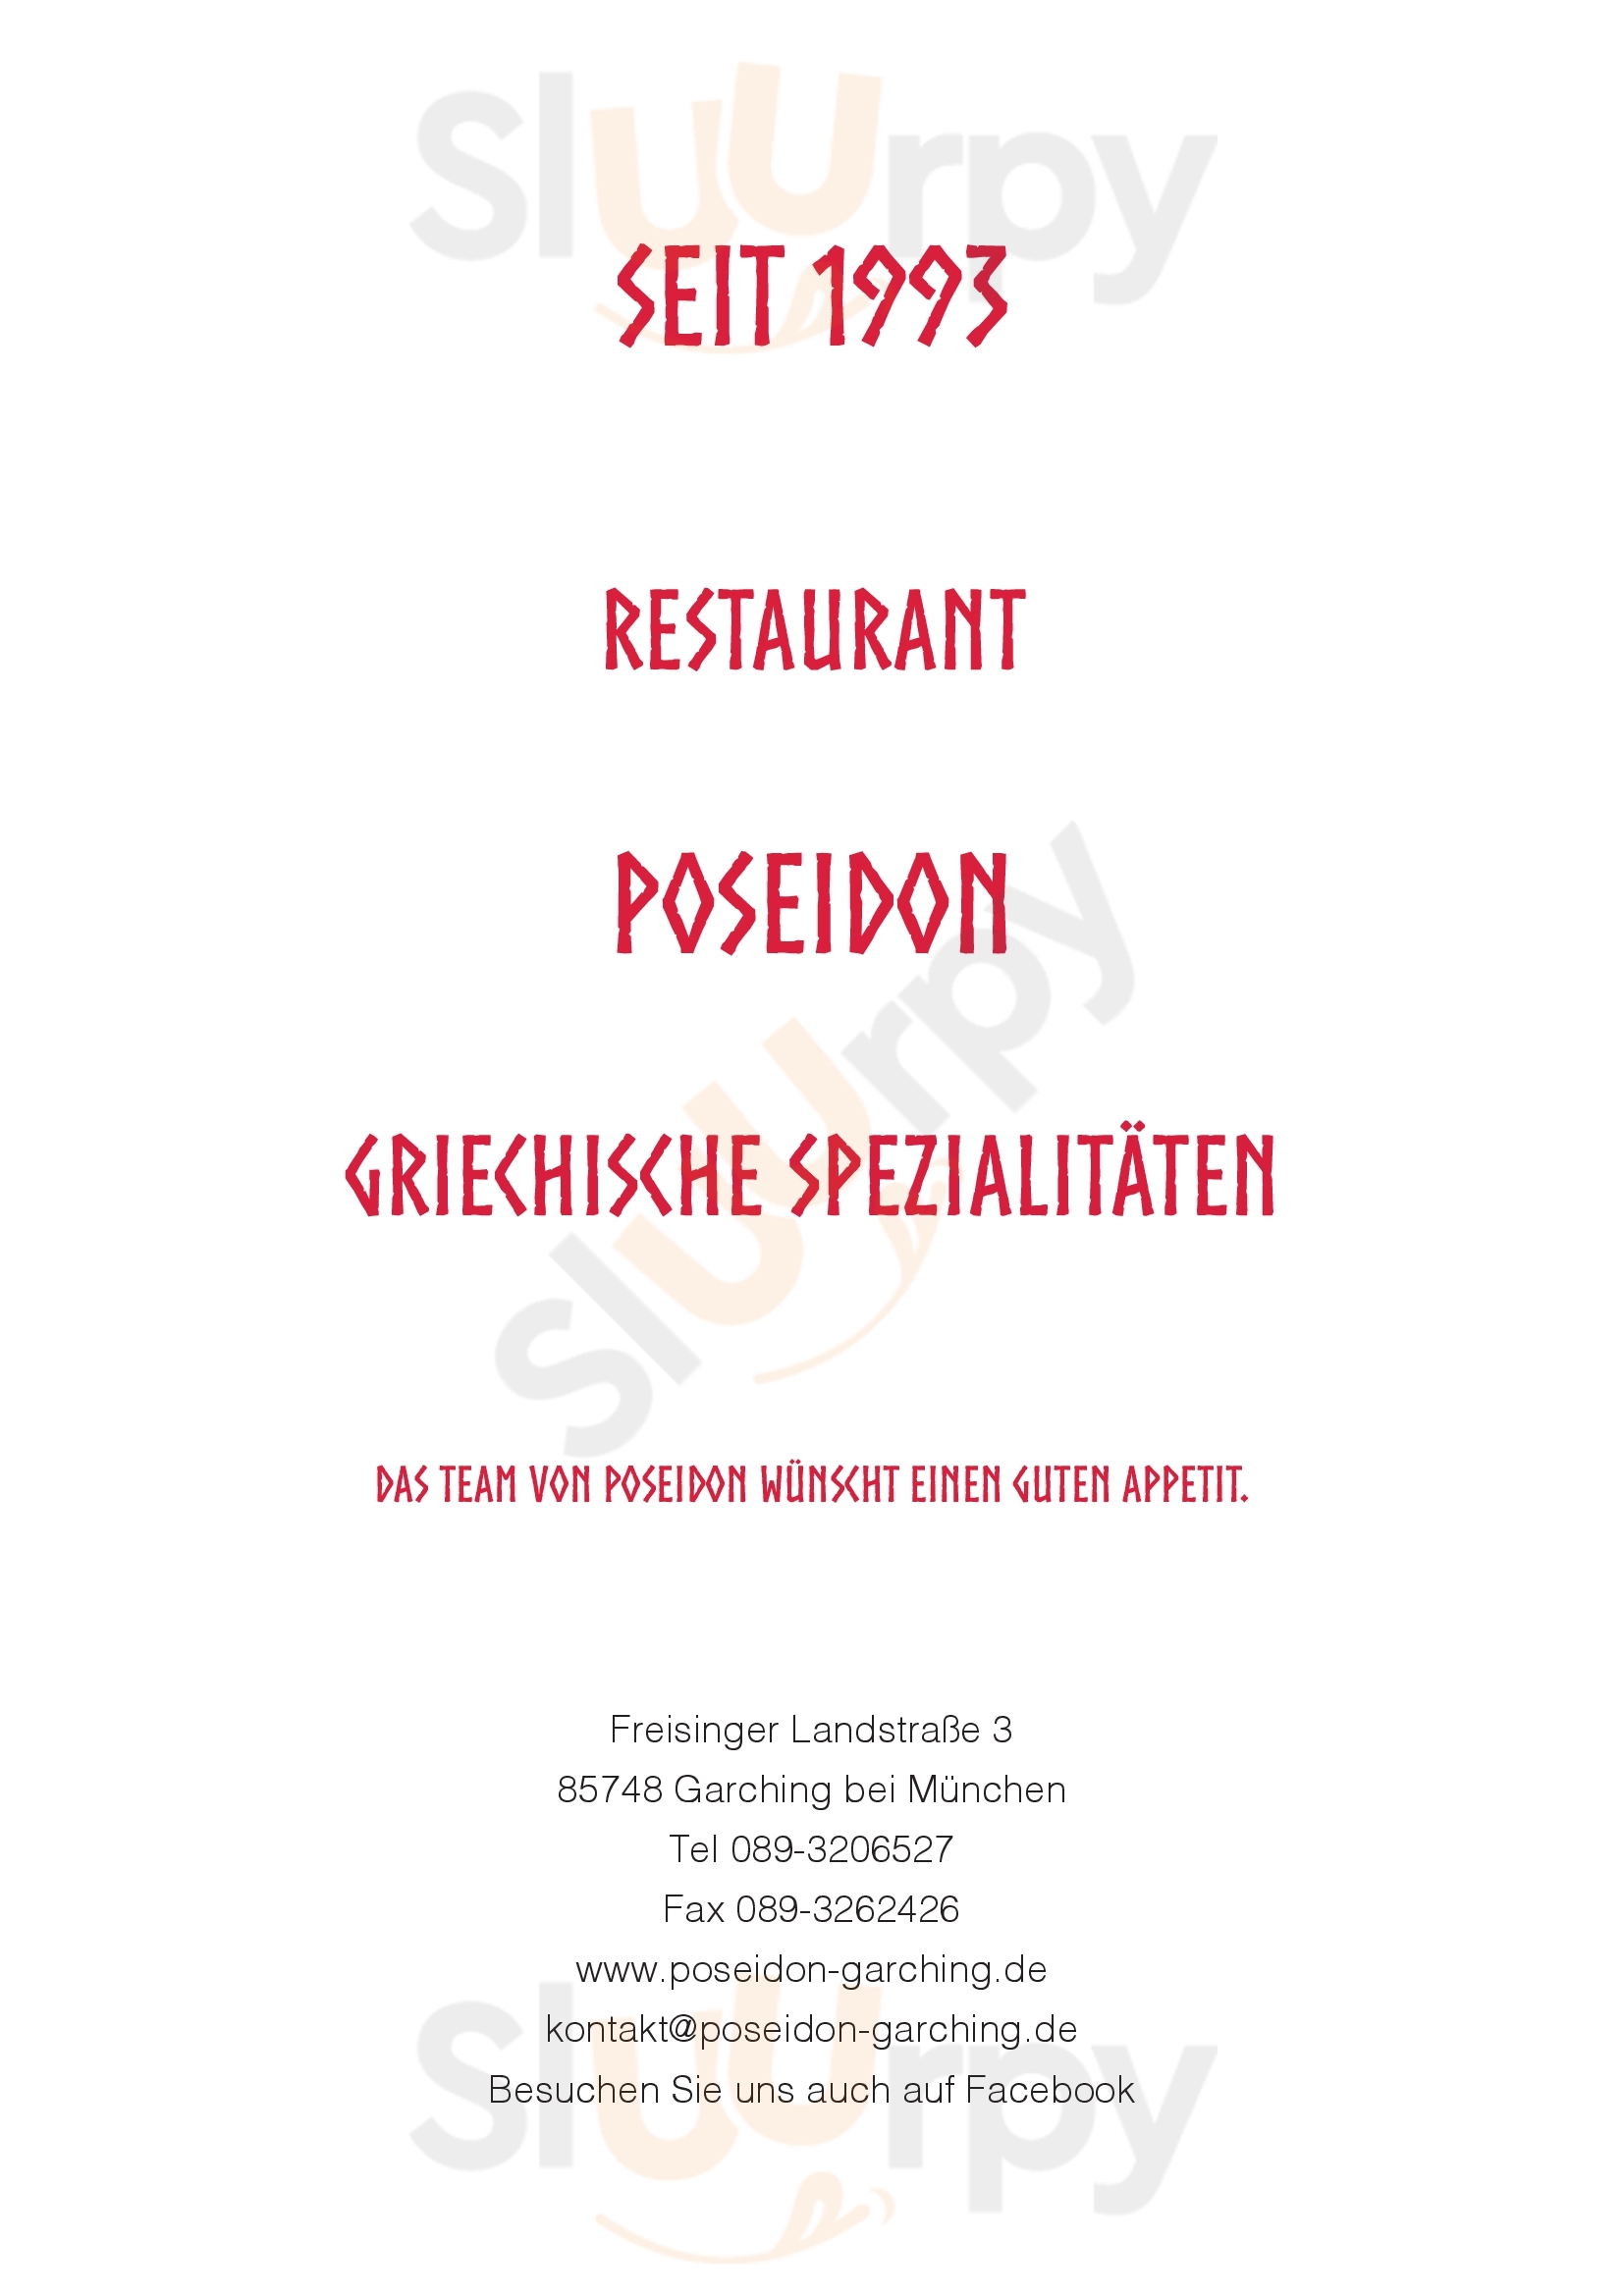 Restaurant Poseidon Garching bei München Menu - 1